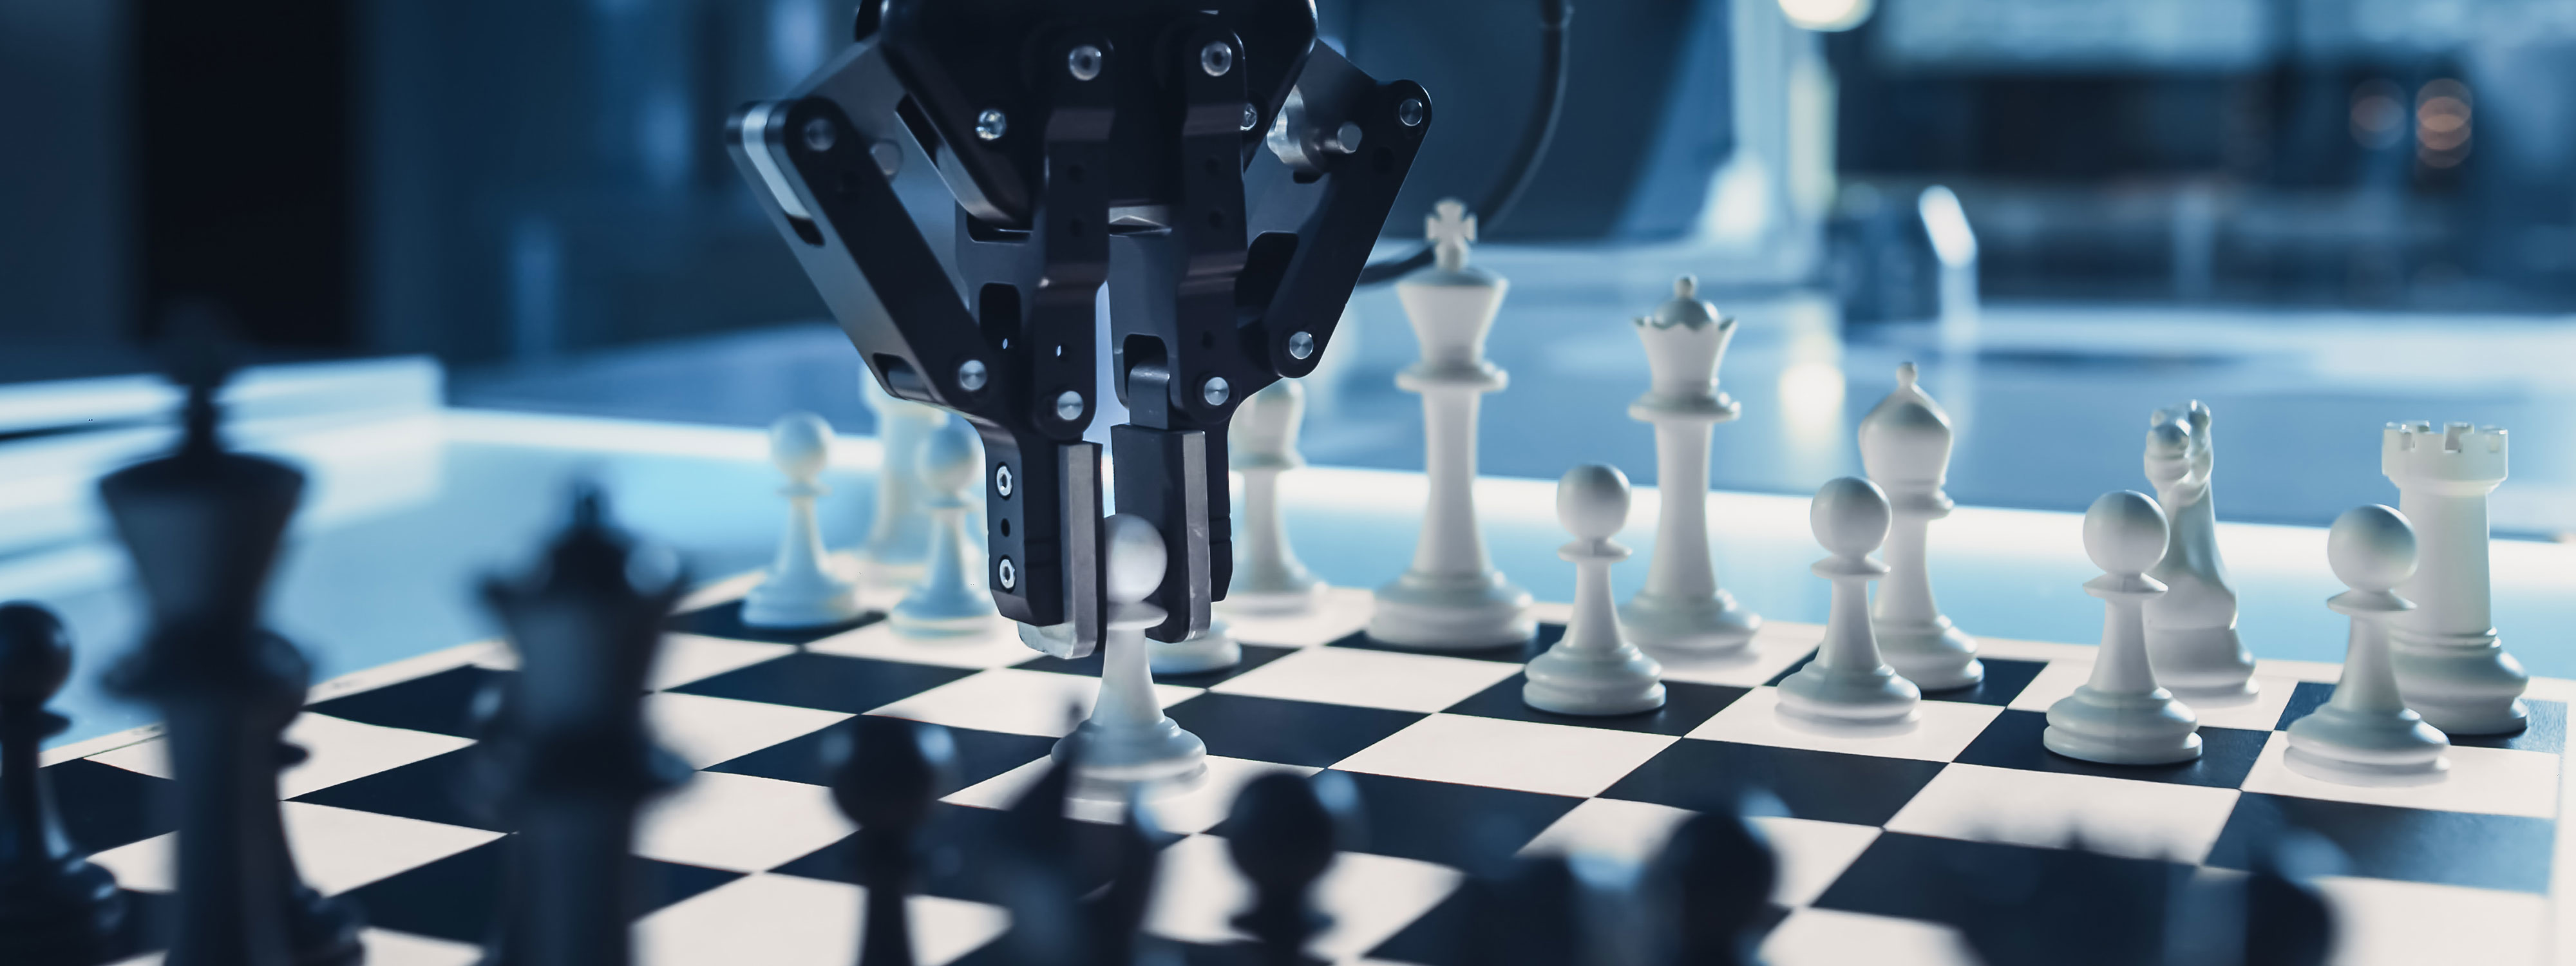 AI Robot playing chess